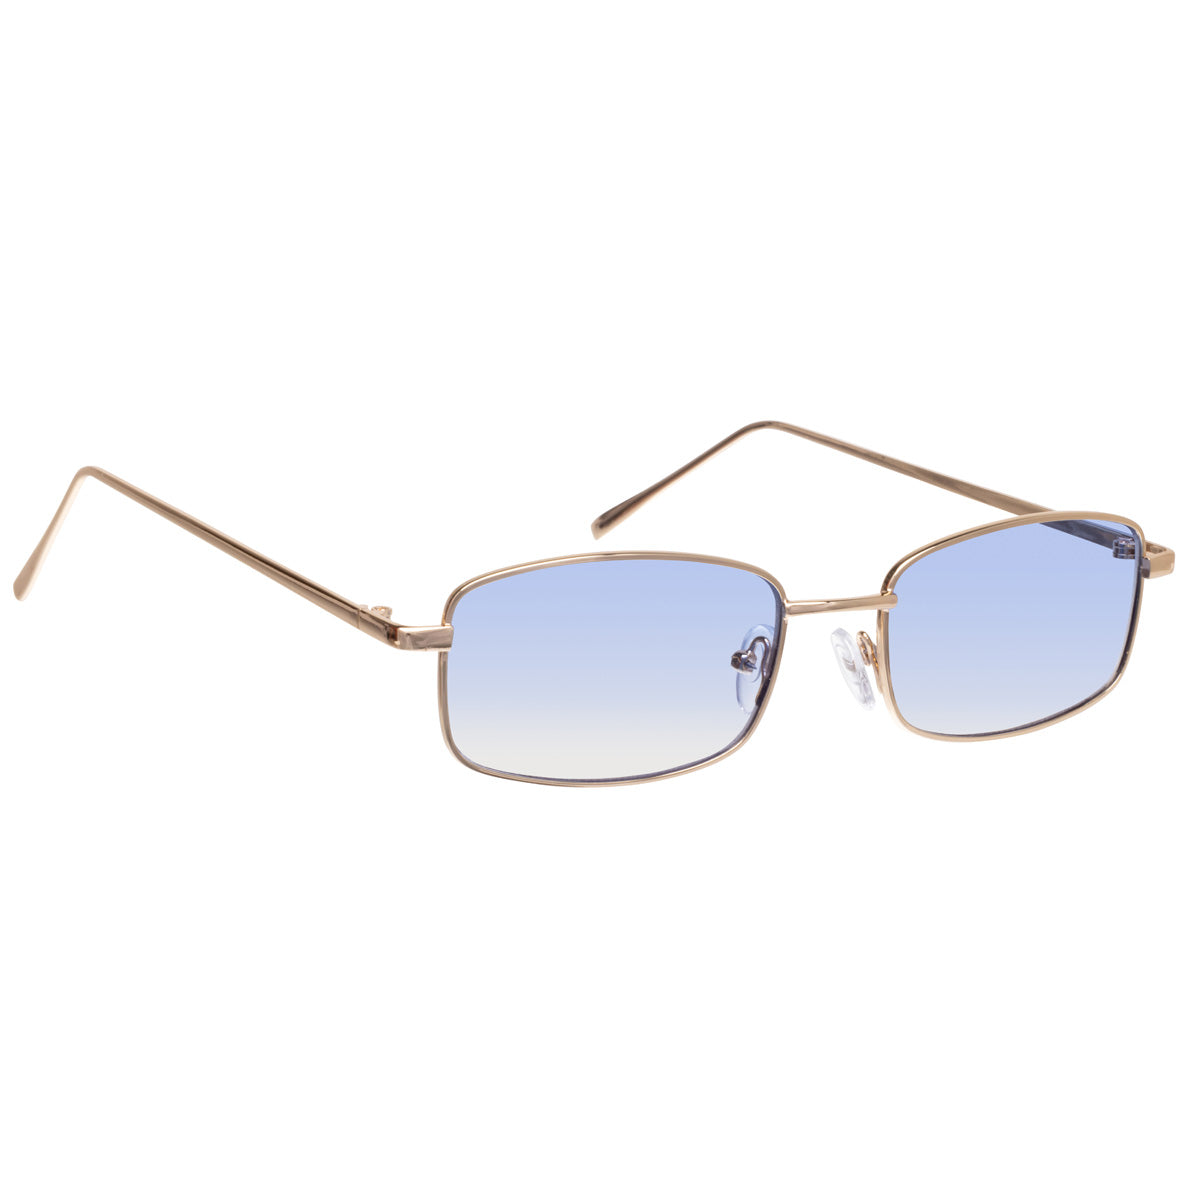 Low rectangular sunglasses with sliding coloured lenses